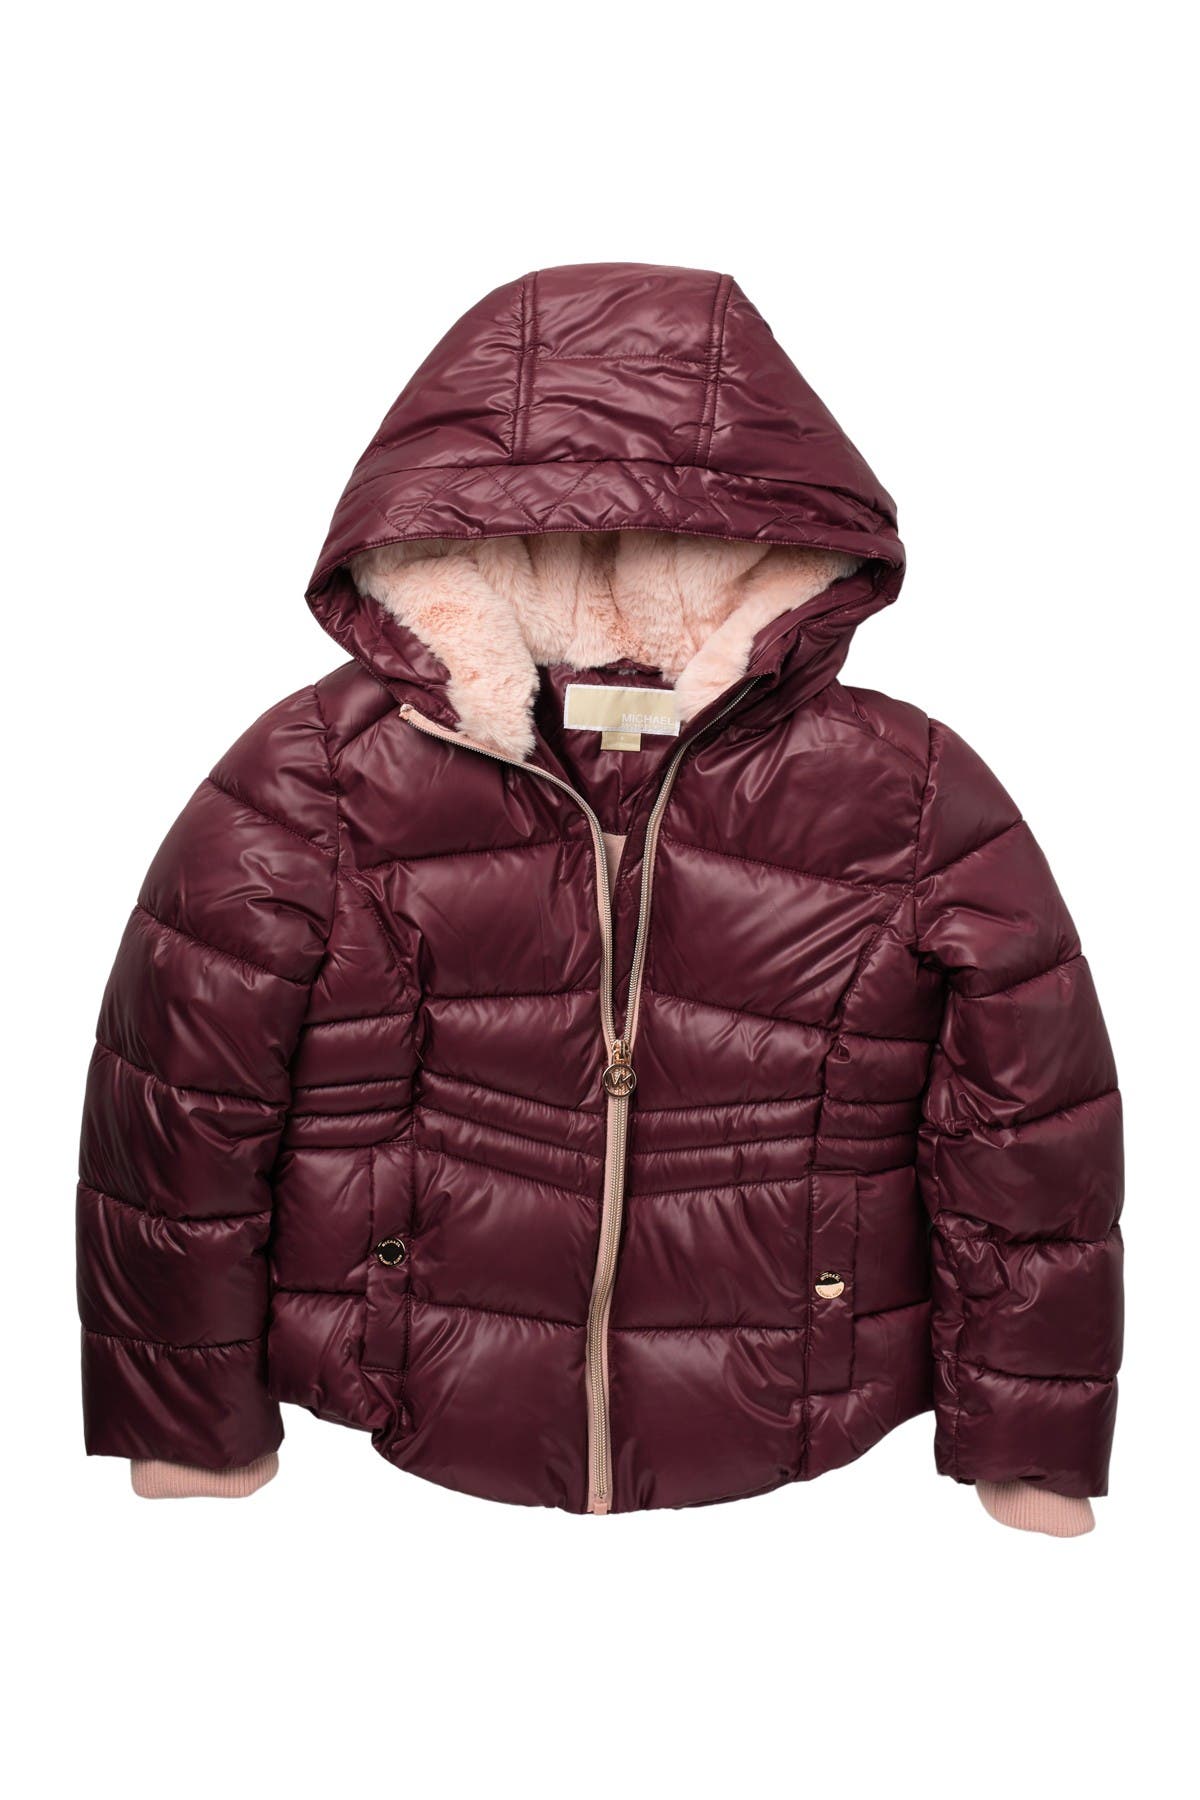 michael kors kids winter jacket